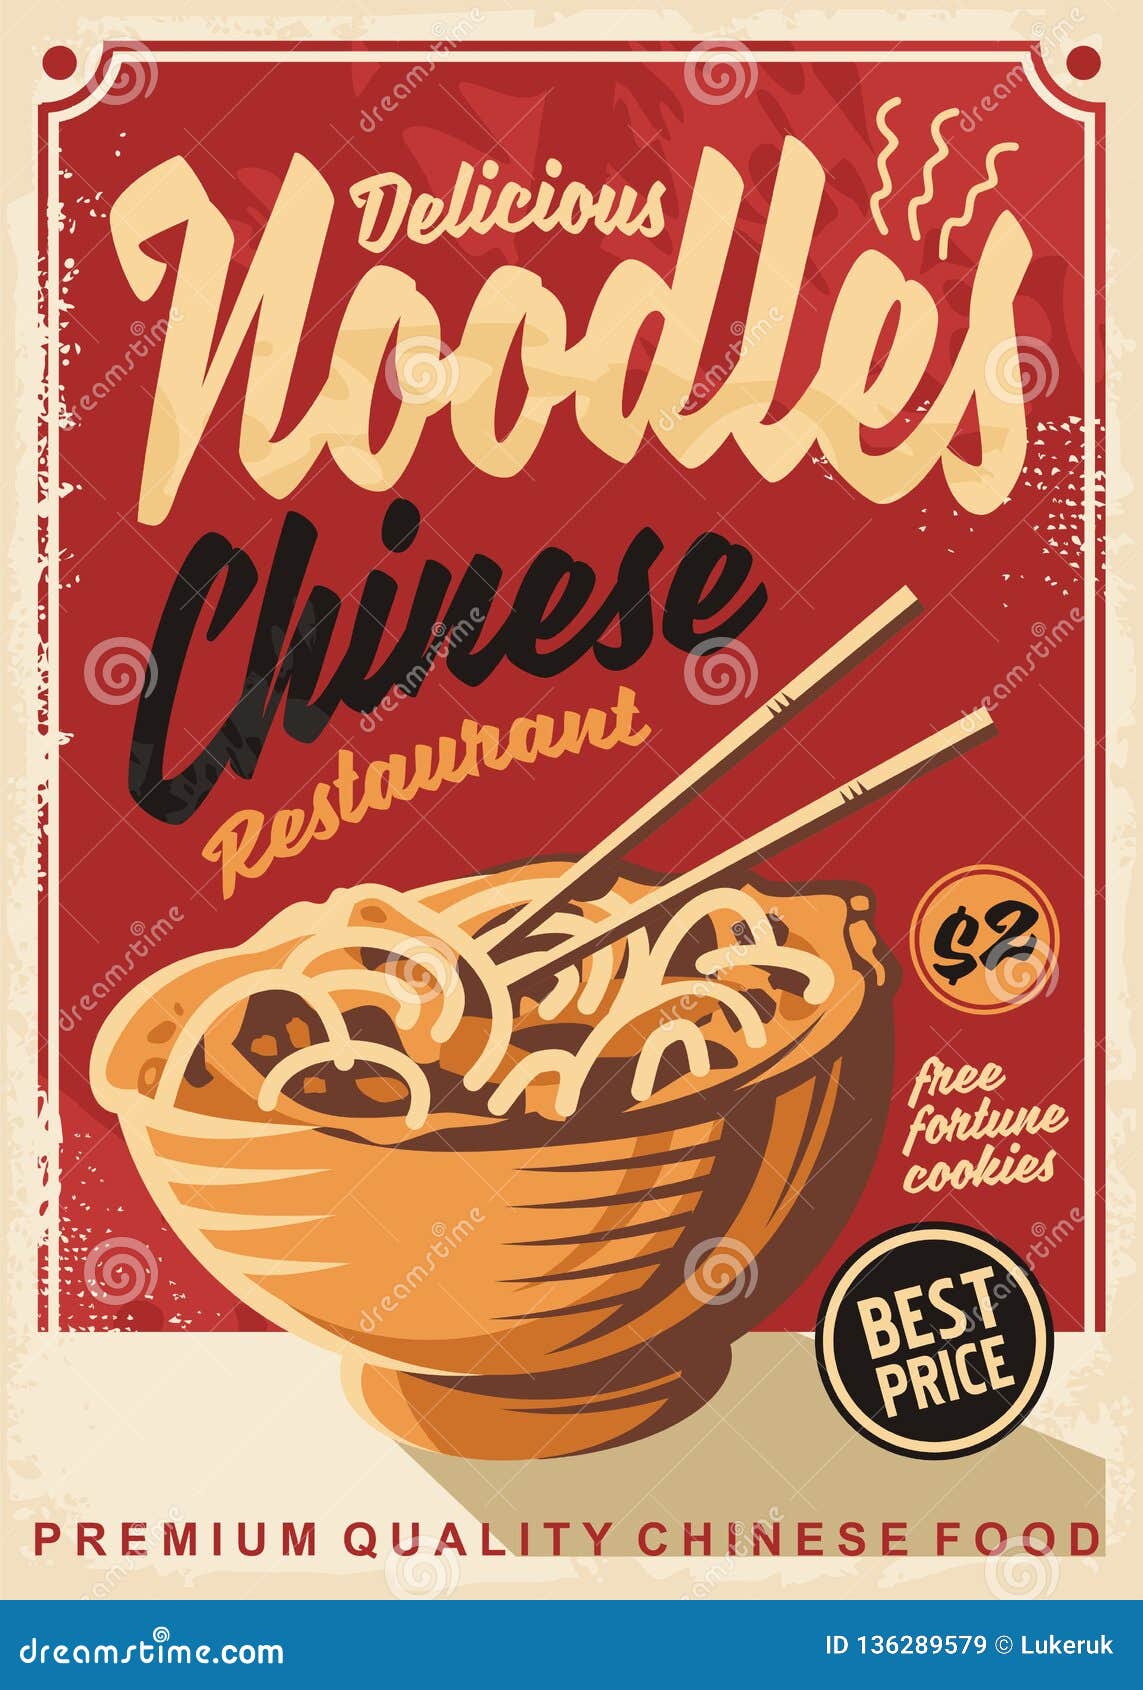 noodles promo poster